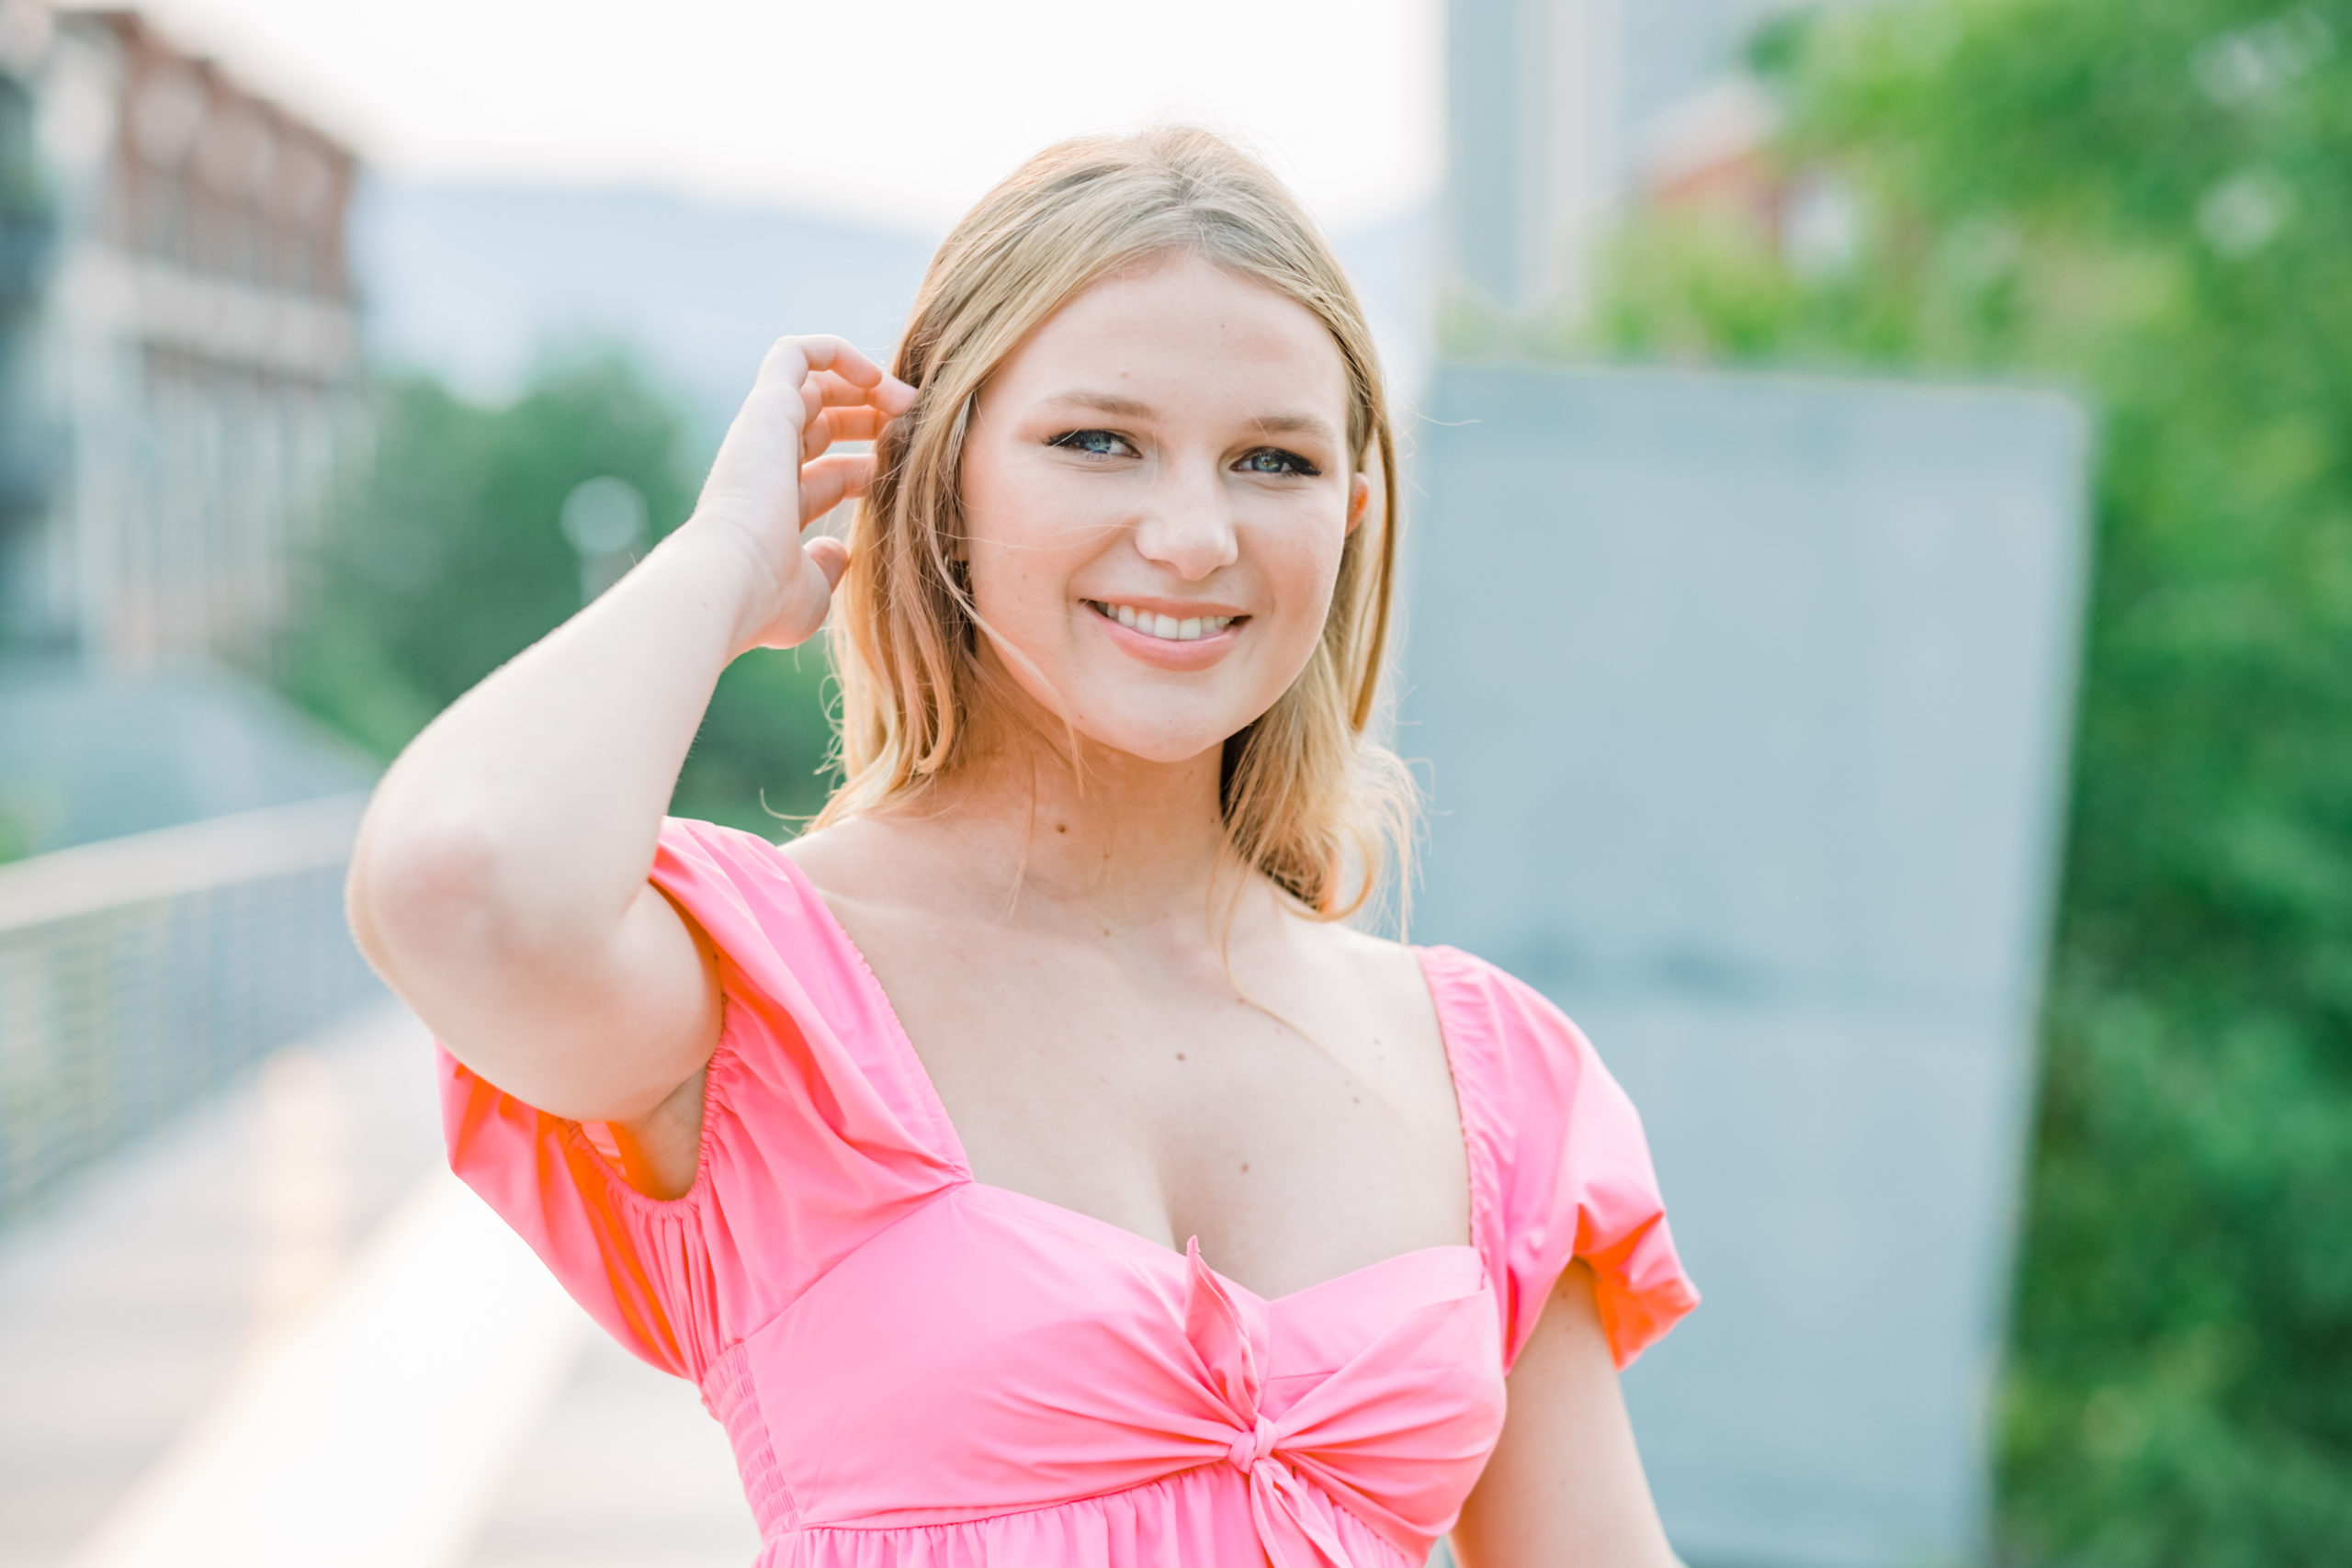 woman wearing pink top smiling at camera